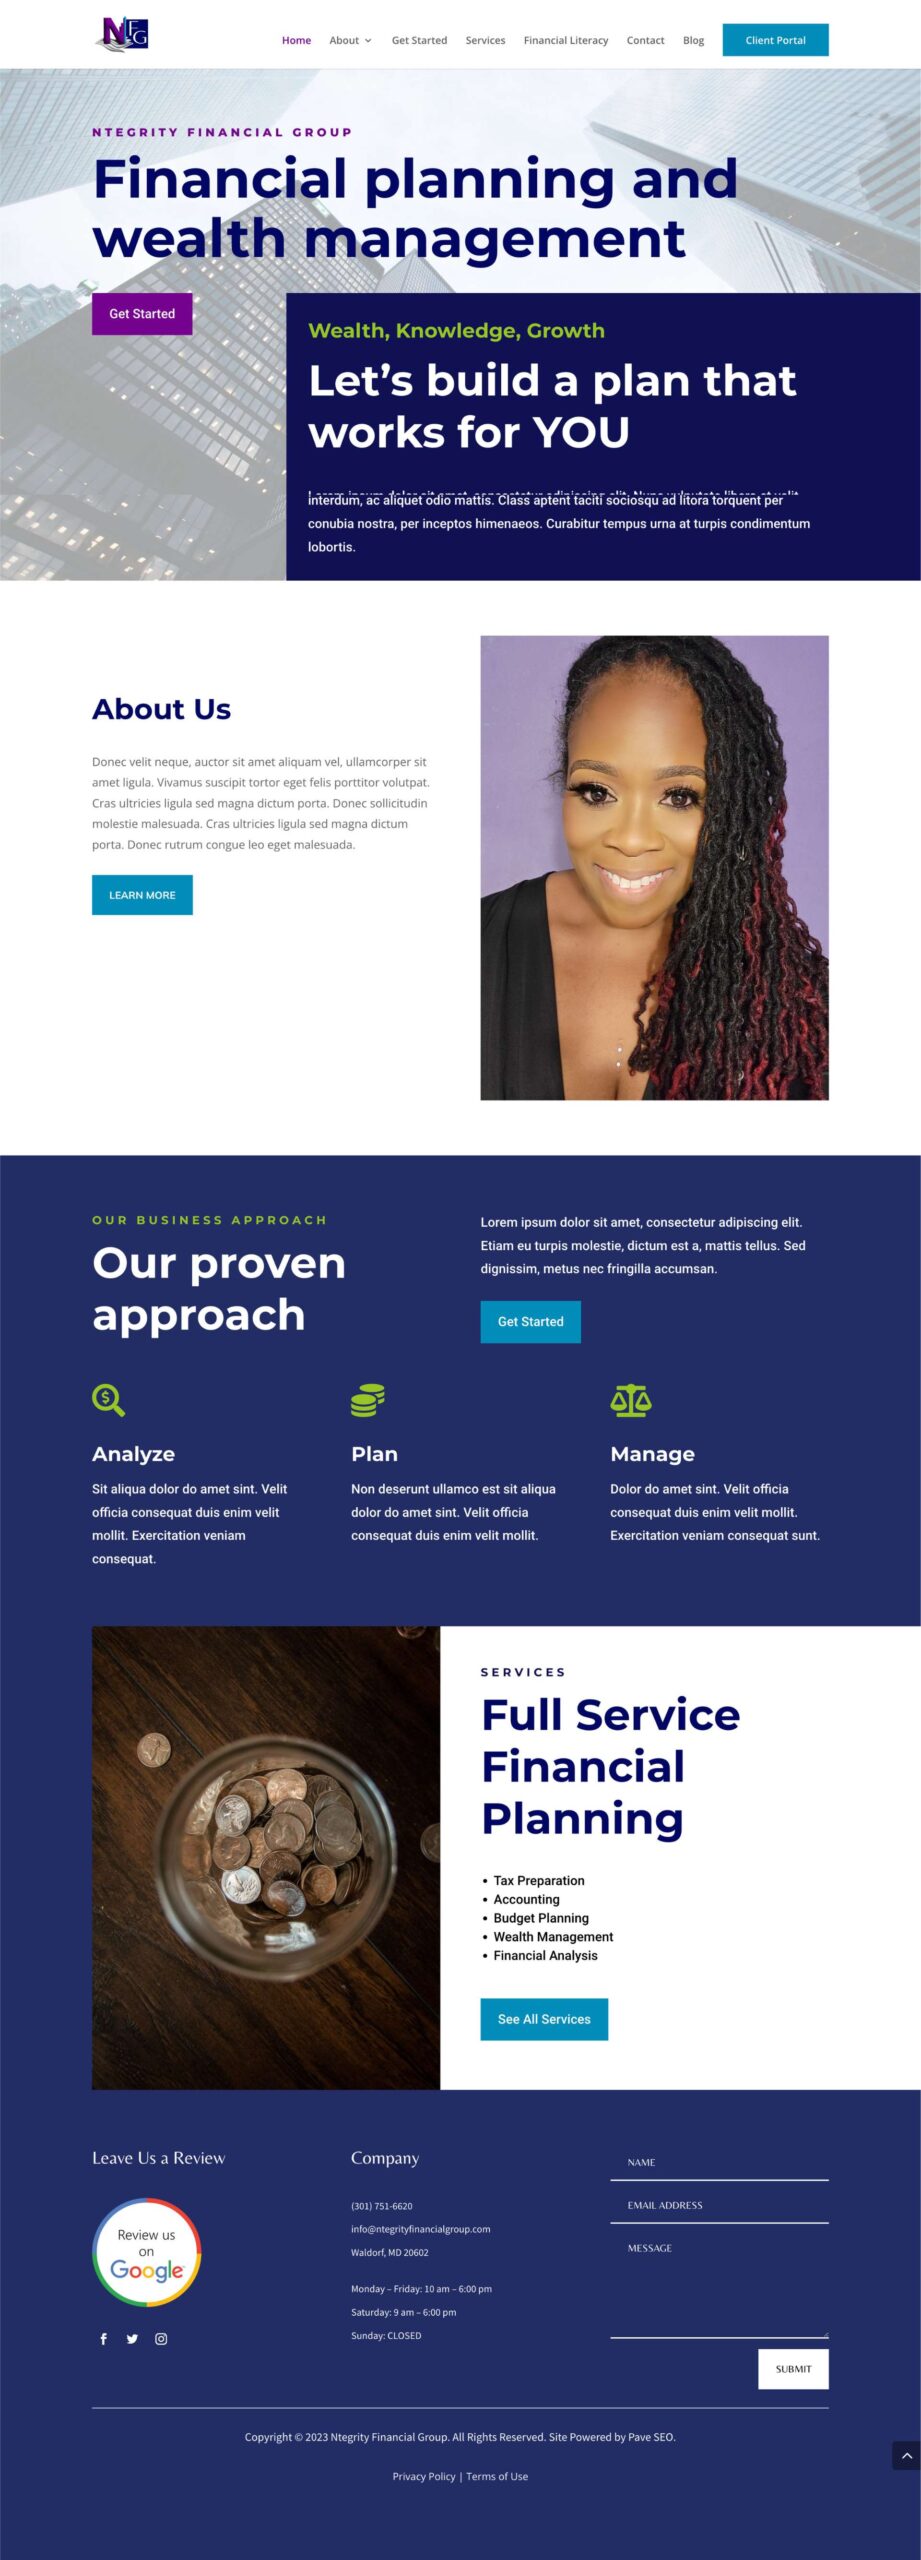 website design for Ntegrity Financial Group